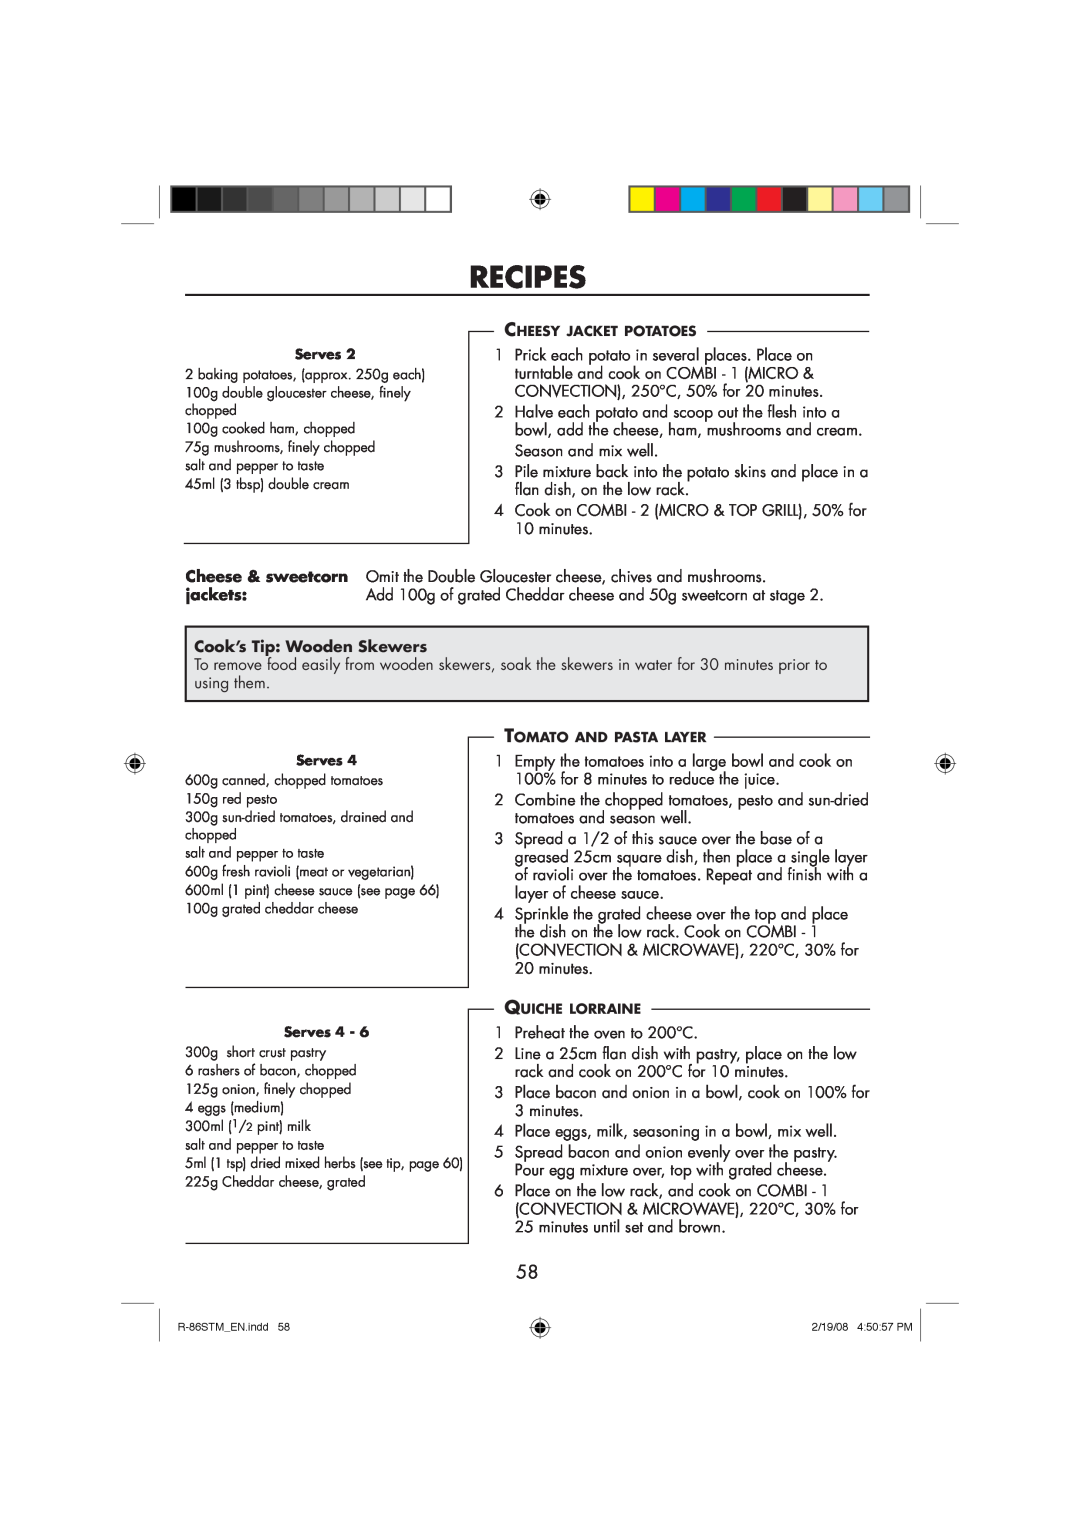 Sharp R-86STM manual Recipes, Cook’s Tip Wooden Skewers 